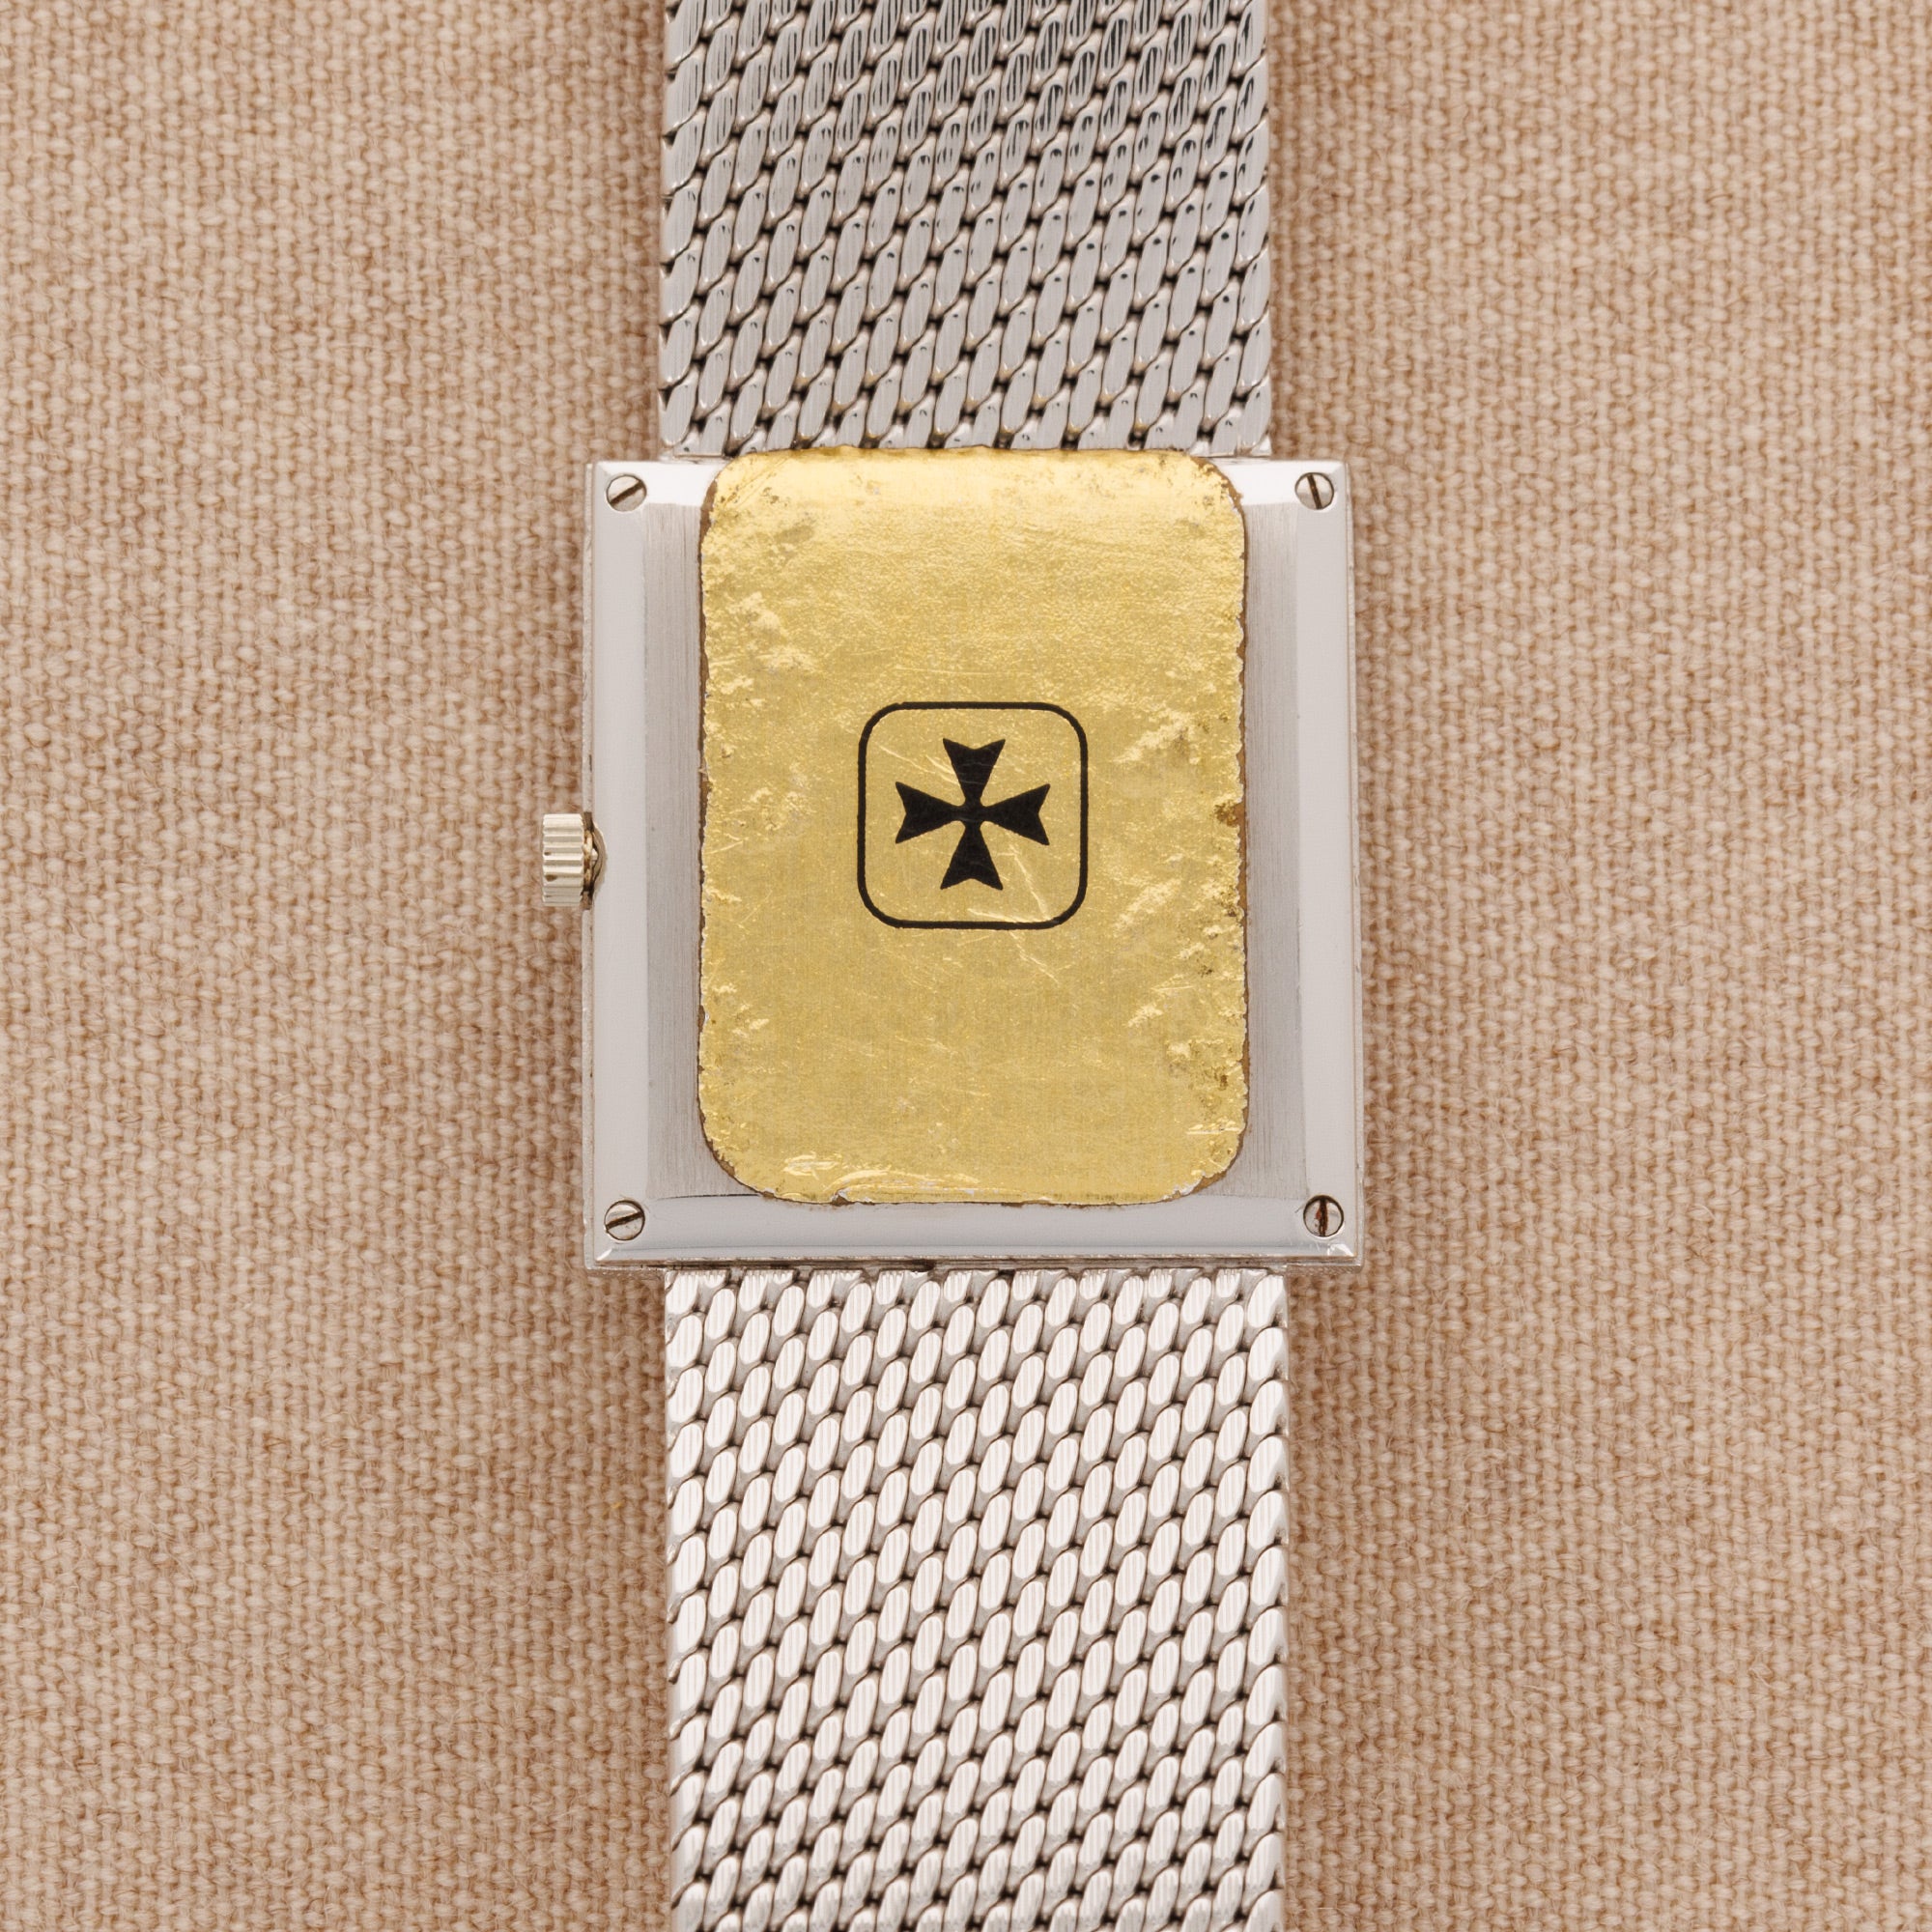 Vacheron Constantin - Vacheron Constantin White Gold Watch Ref. 33001 with Onyx Dial - The Keystone Watches